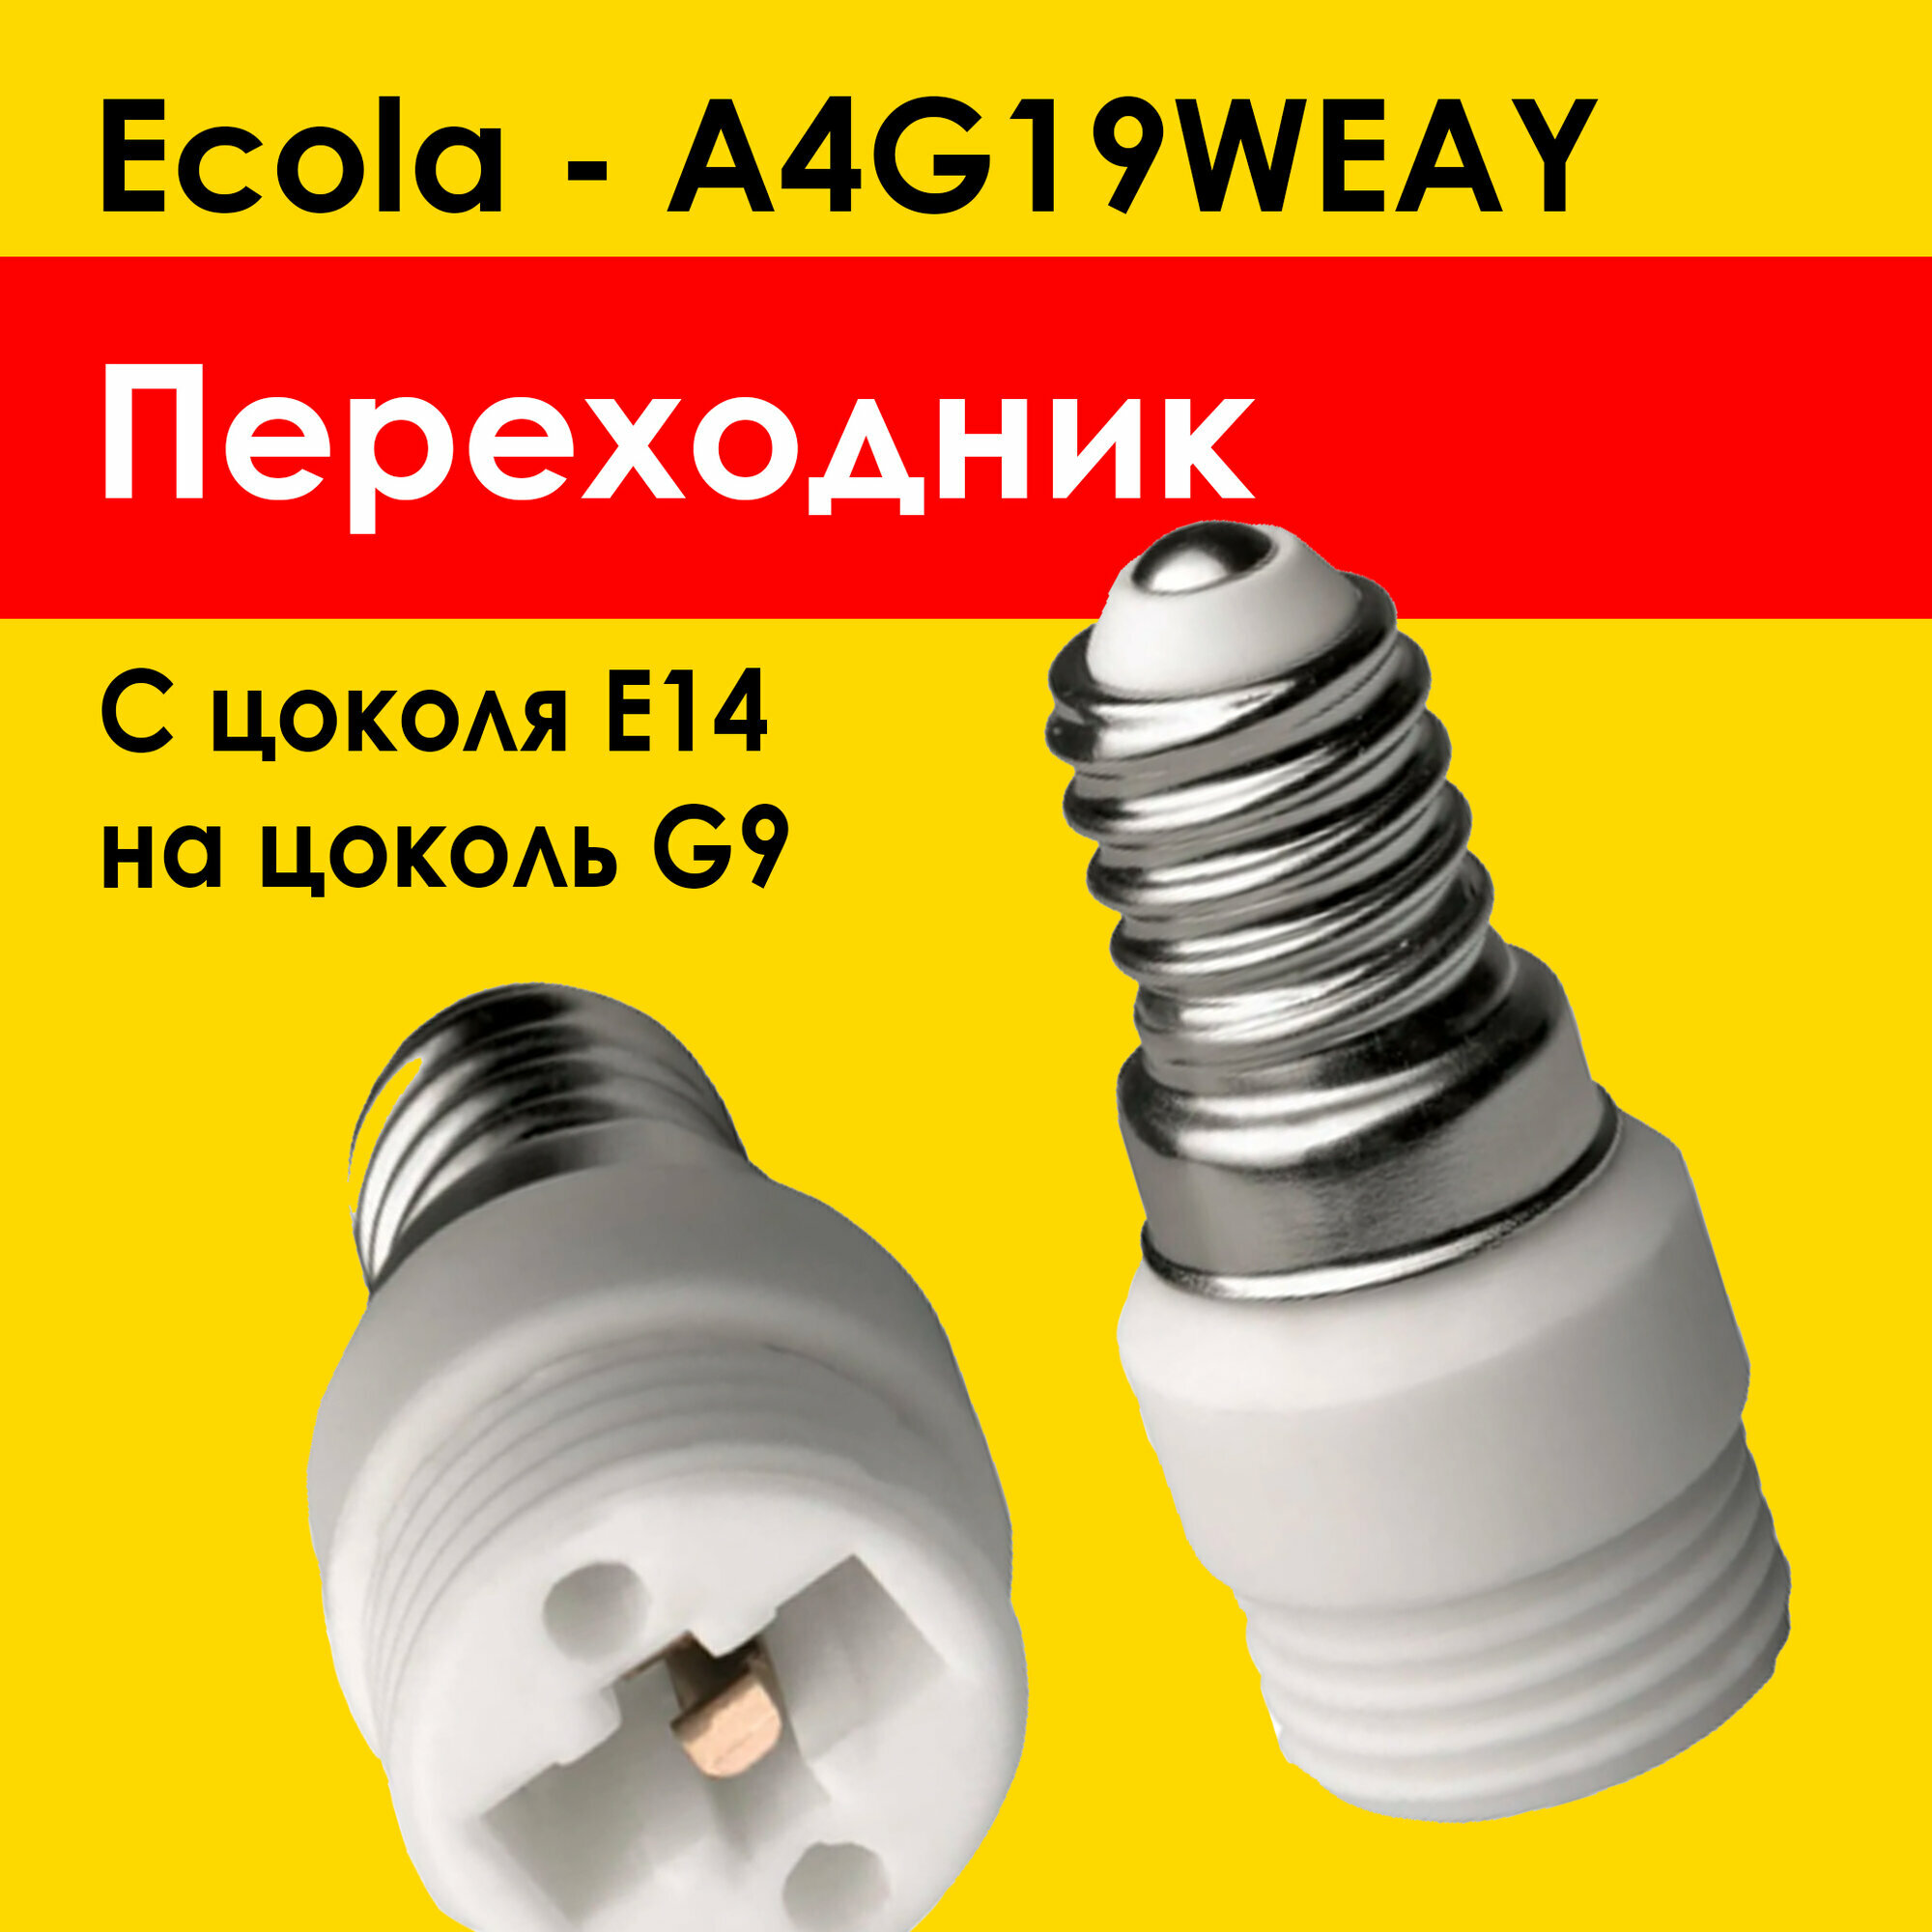 Ecola переходник E14 на G9 для лампочки g9 под цоколь e14 (A4G19WEAY) патрон белый